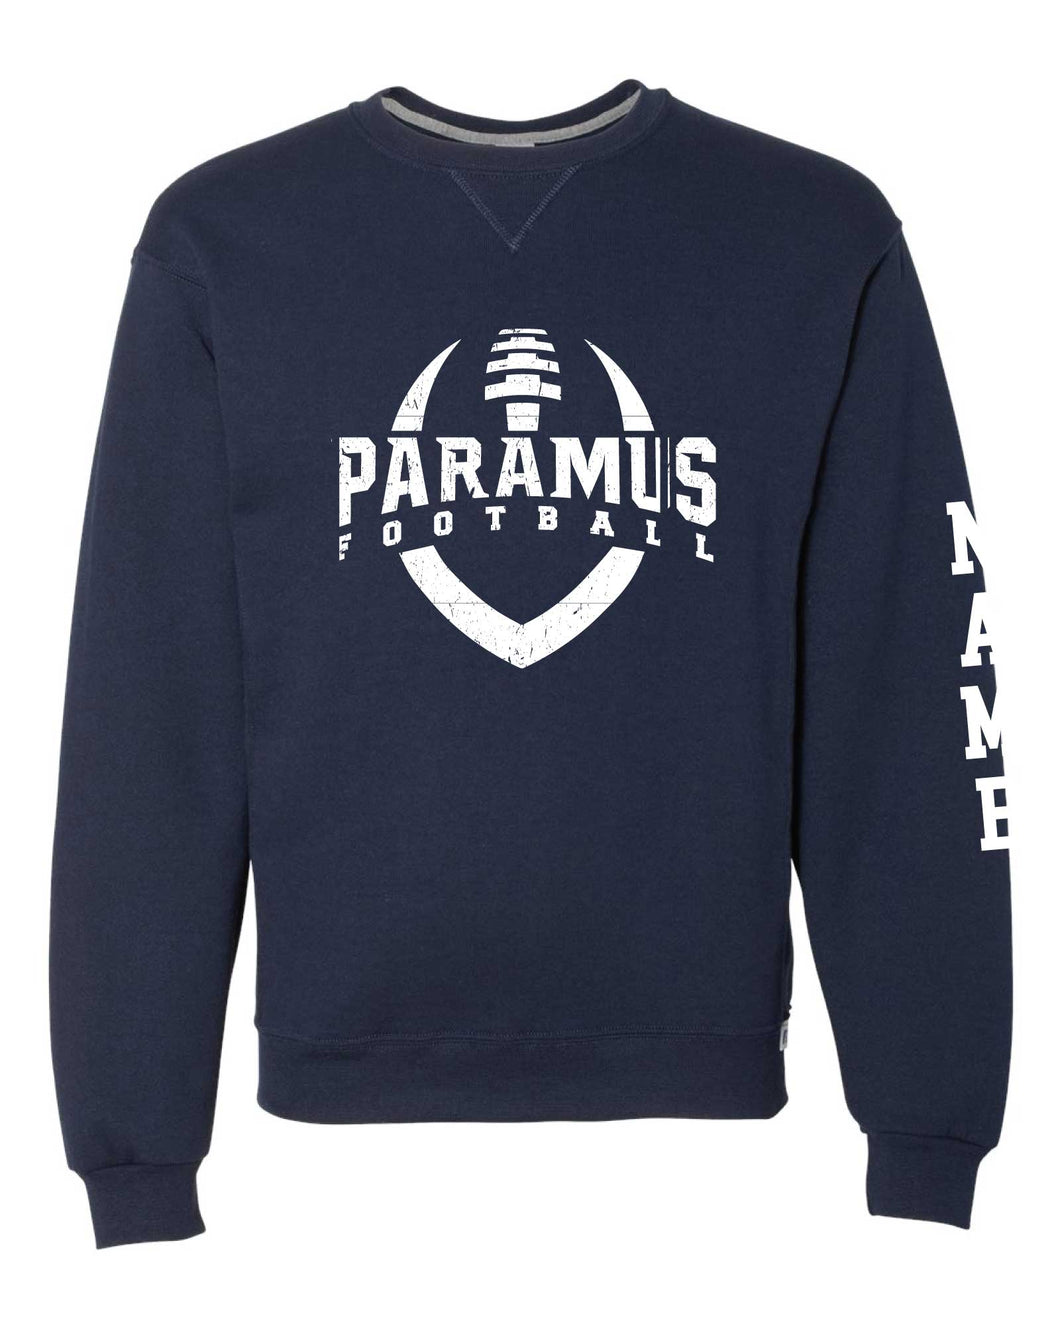 Paramus Football Russell Athletic Cotton Crewneck Sweatshirt - Navy - 5KounT